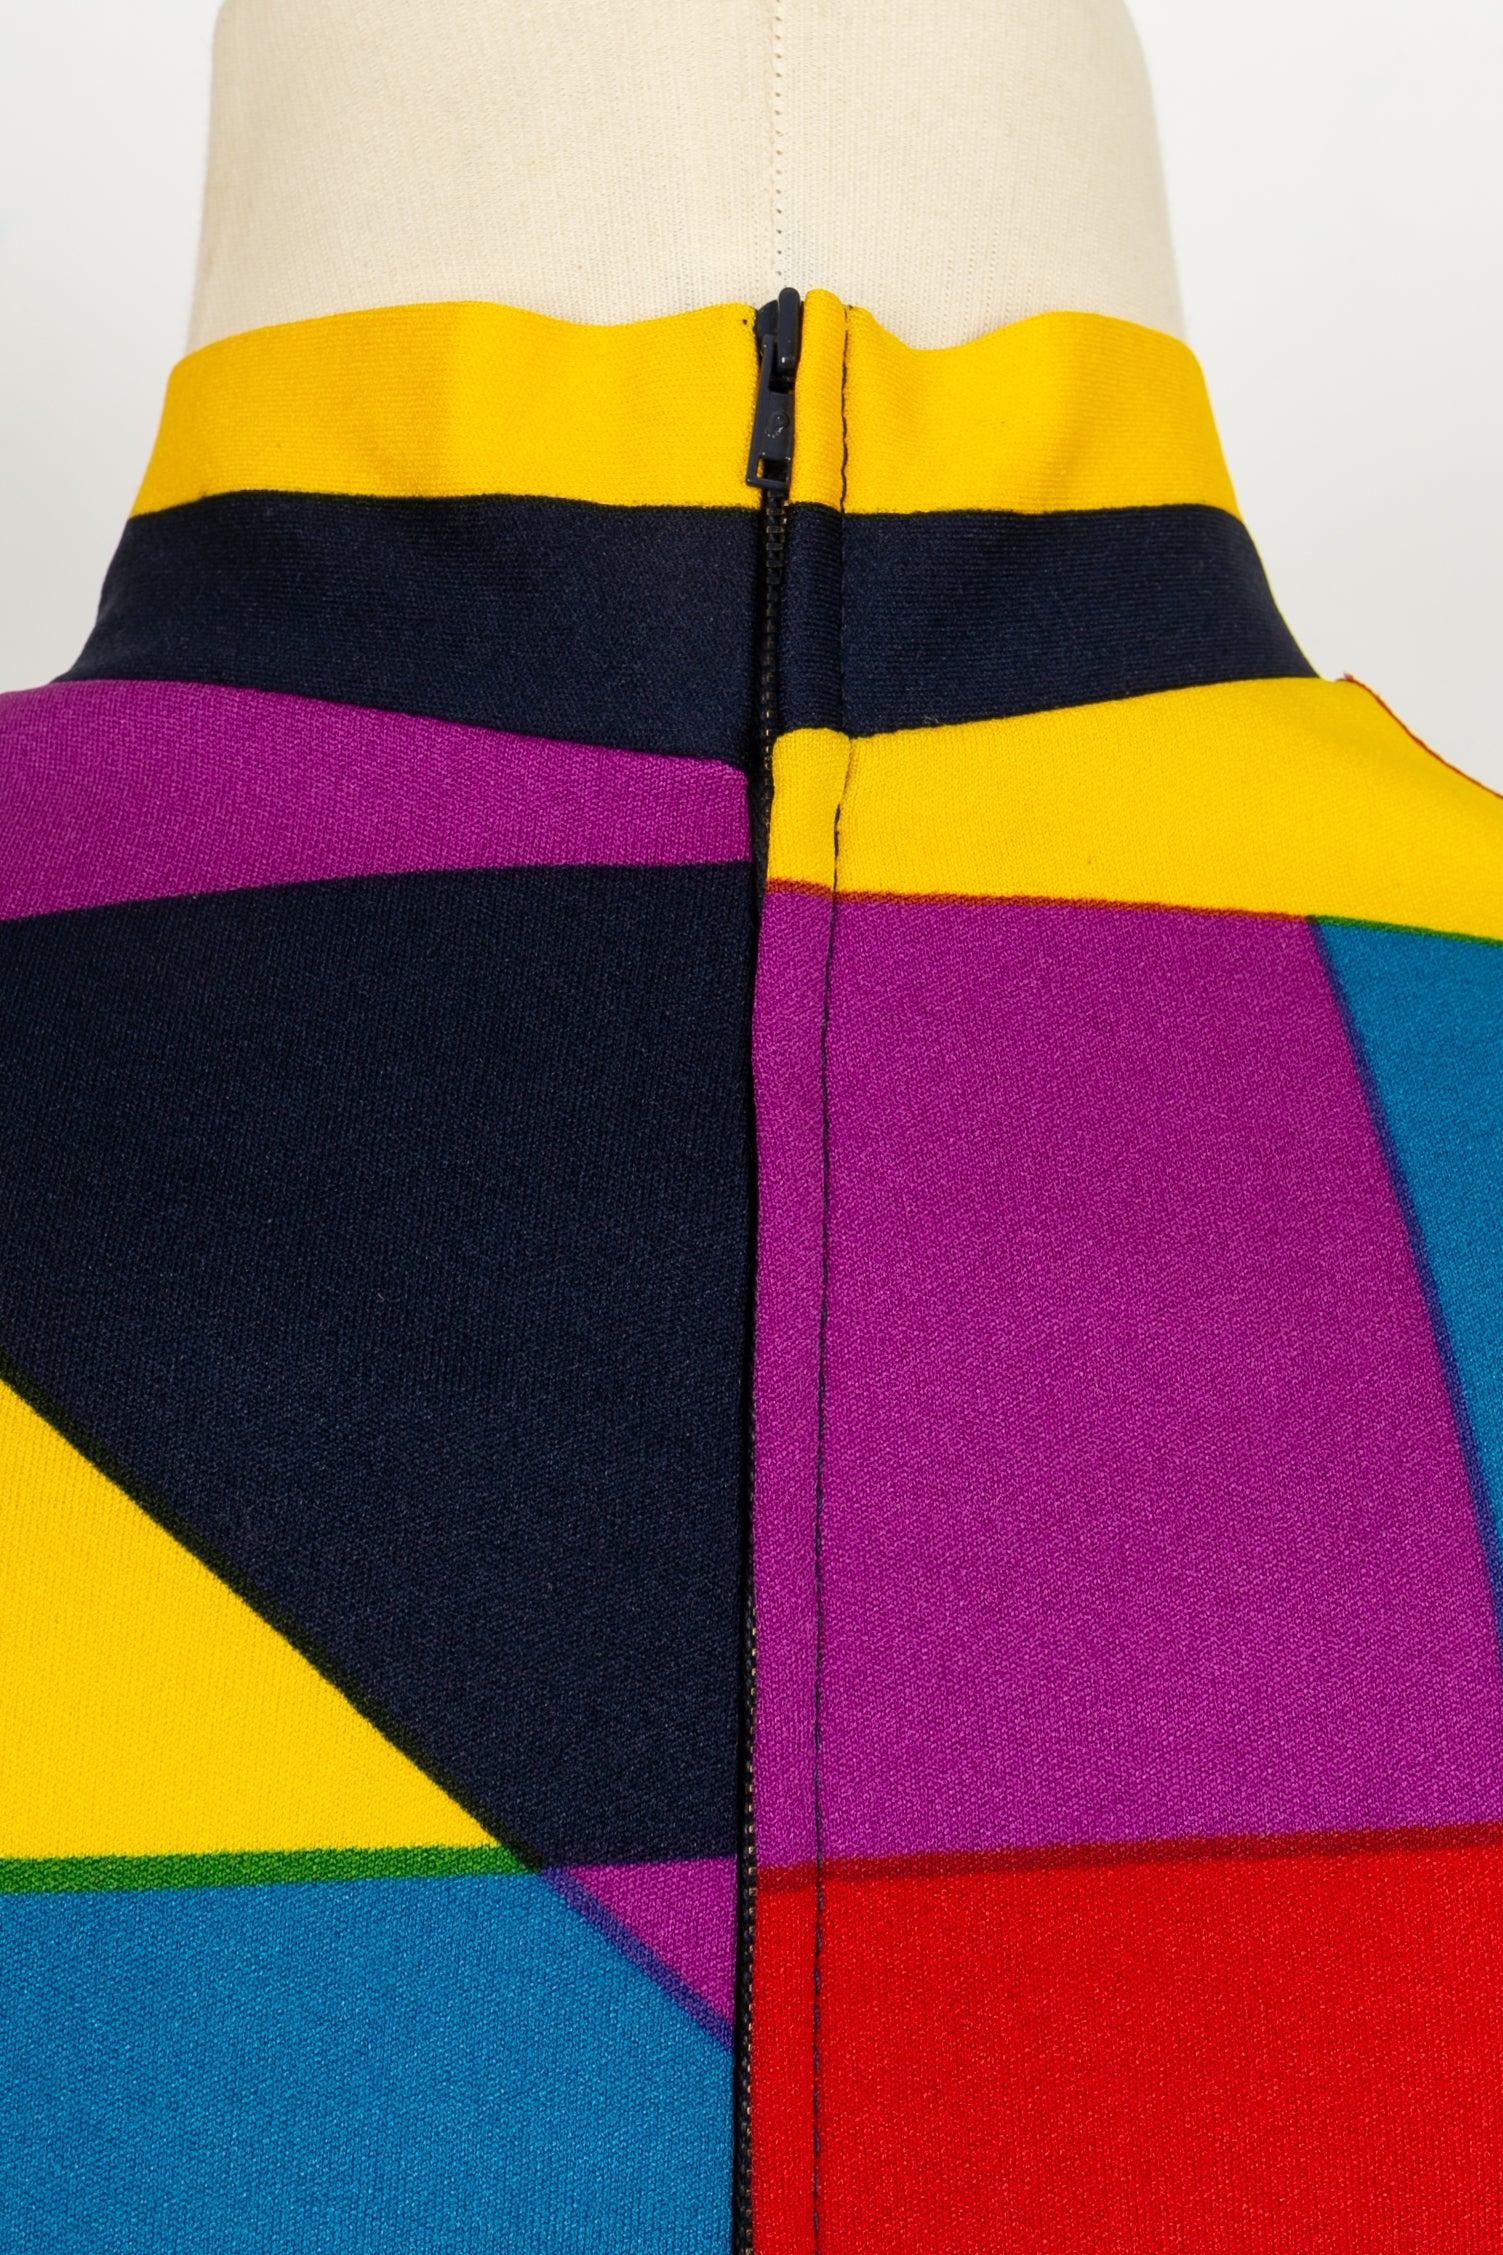 Lanvin Short Dress in Multicolored Jersey For Sale 1